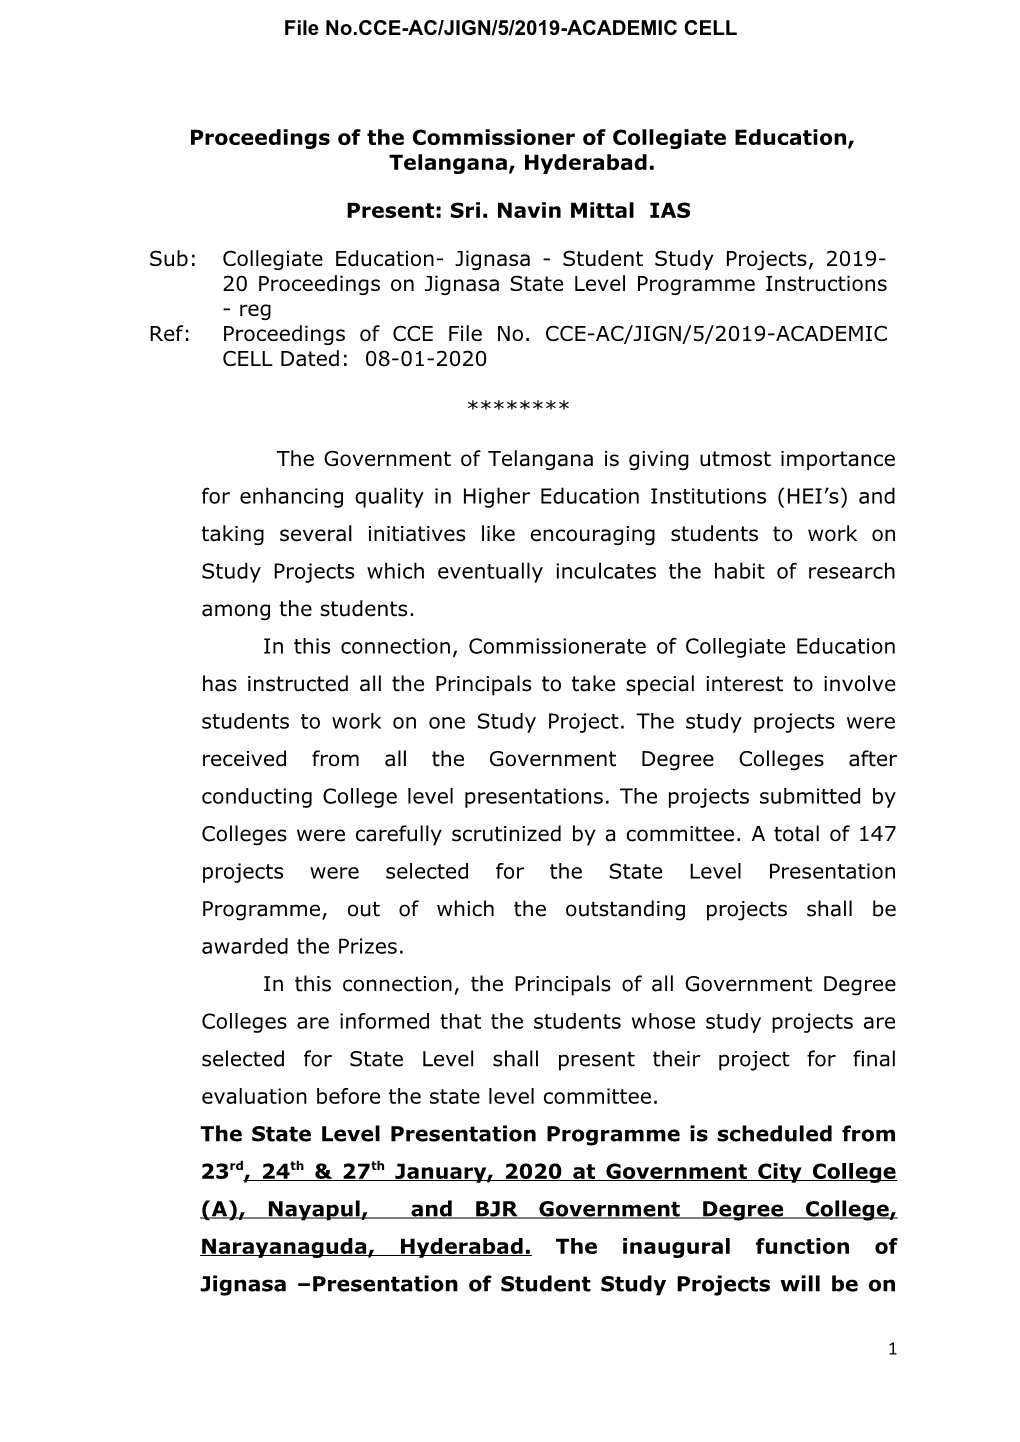 Proceedings of the Commissioner of Collegiate Education, Telangana, Hyderabad